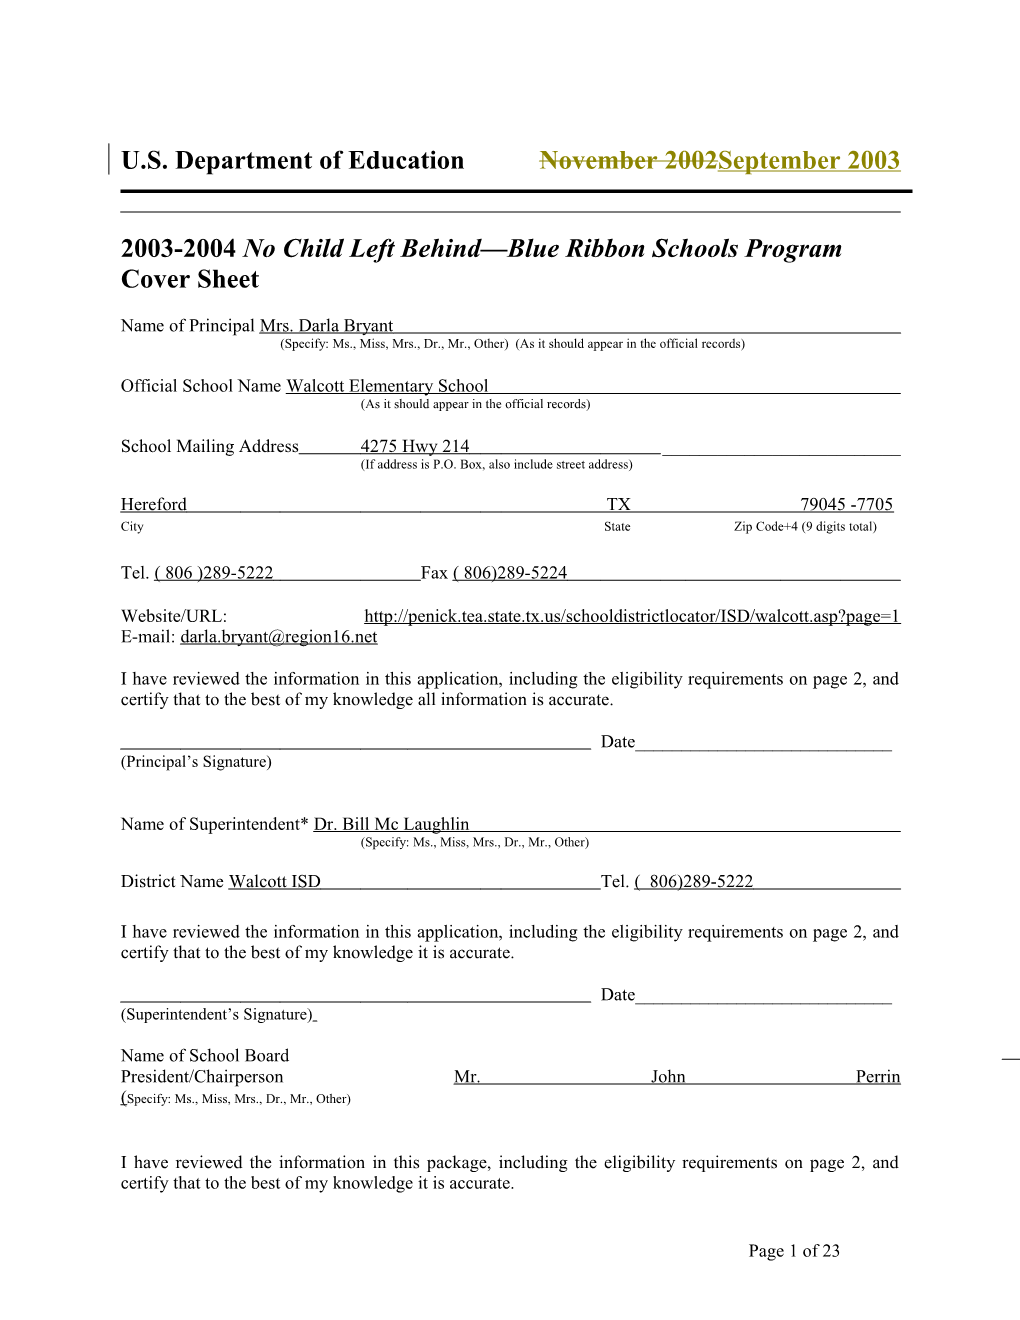 Walcott Elementary School 2004 No Child Left Behind-Blue Ribbon School Application (Msword)